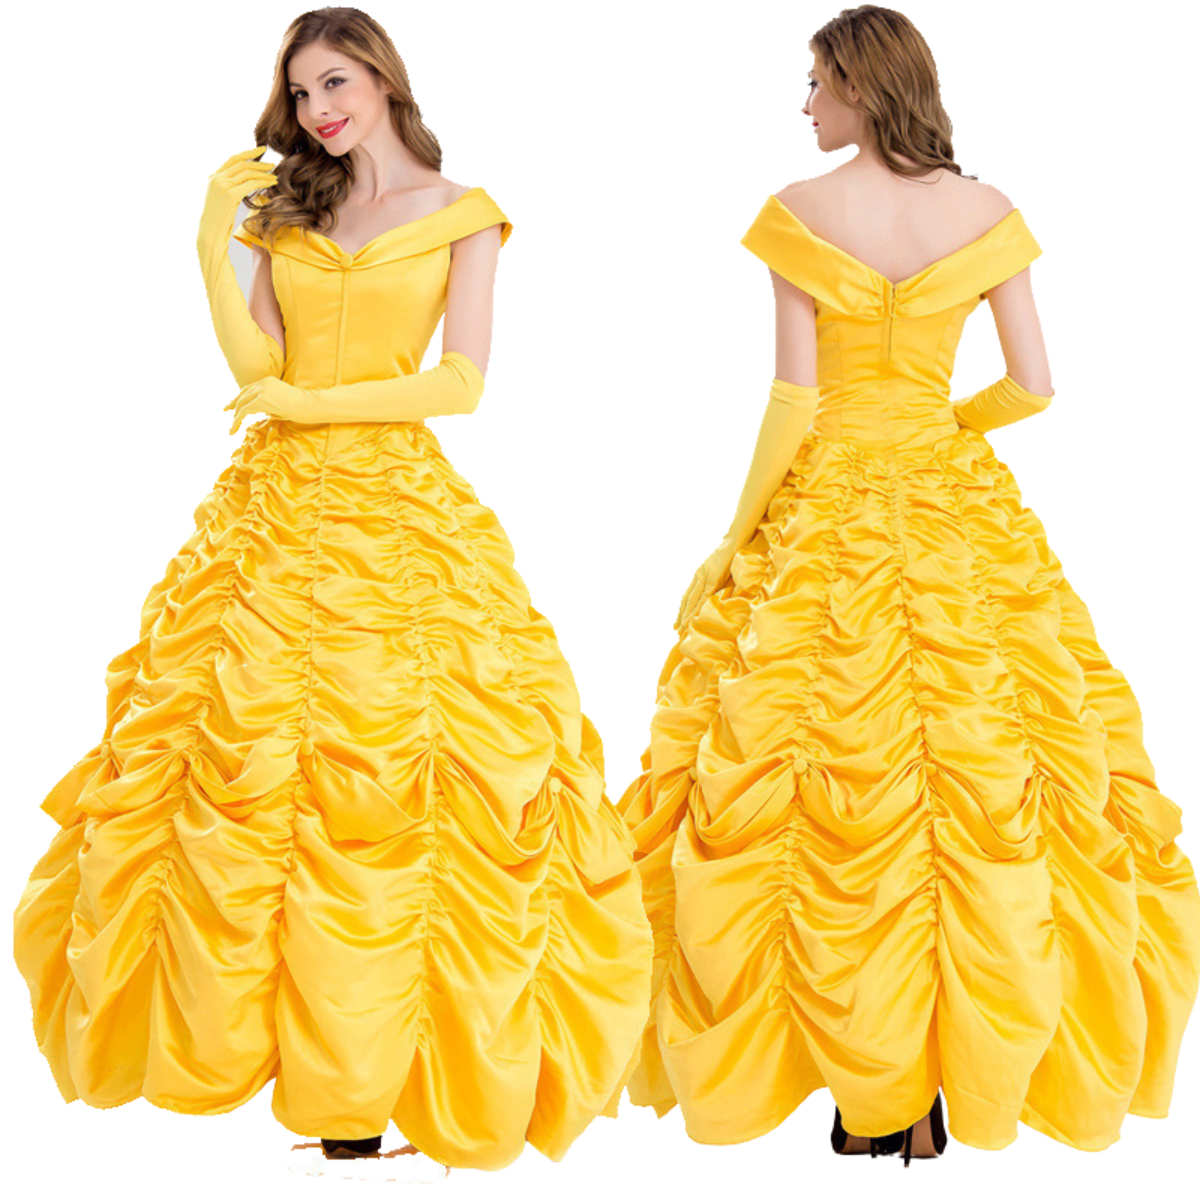 Princess Belle Costume Layered Dress up Halloween Cosplay – Minimewear